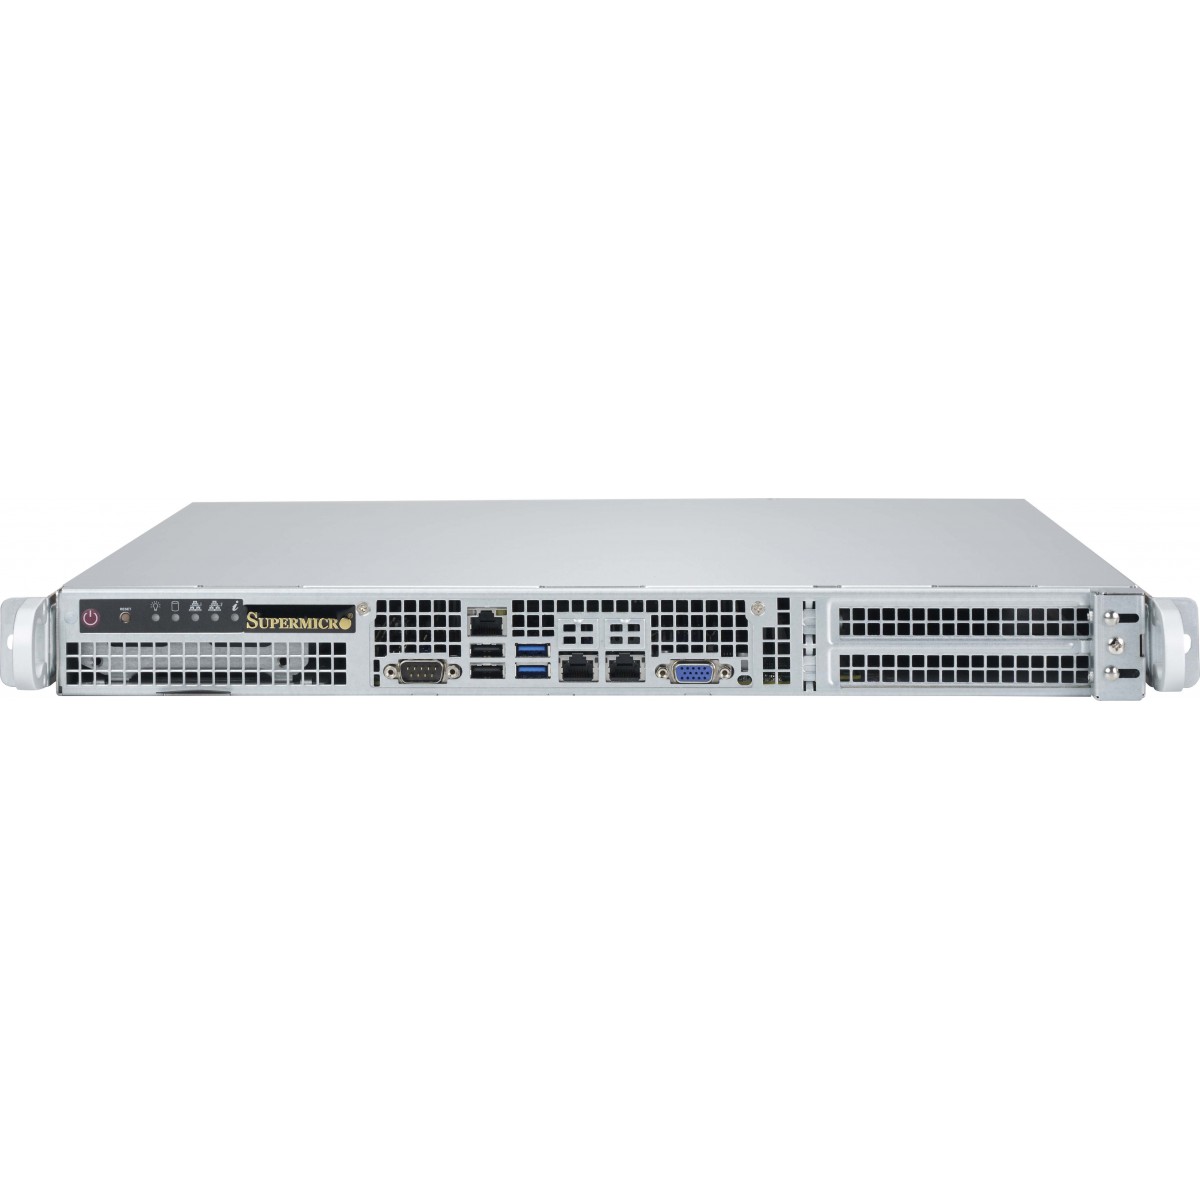 Supermicro 515-505 - Rack - Server - Grey - EATX - 1U - Home/Office